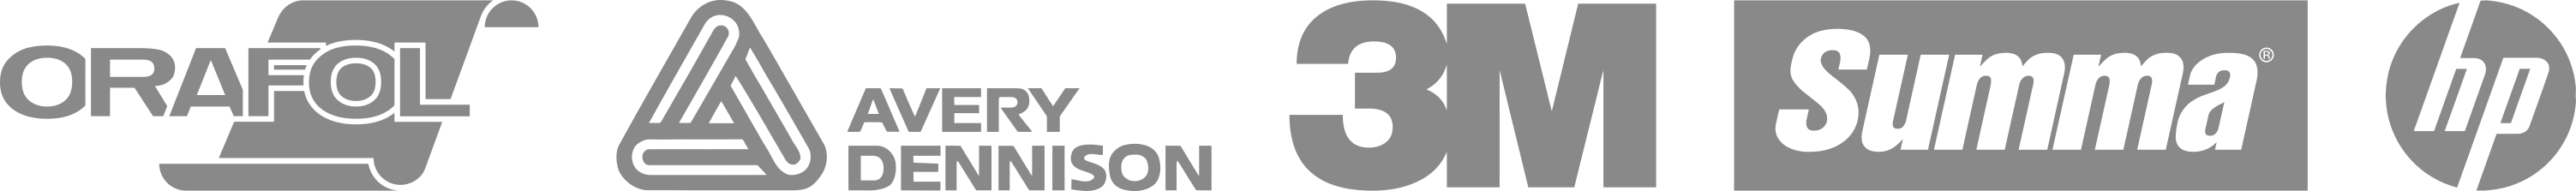 Logo Orafol, Avery Dennison, 3M, SUMMA, HP